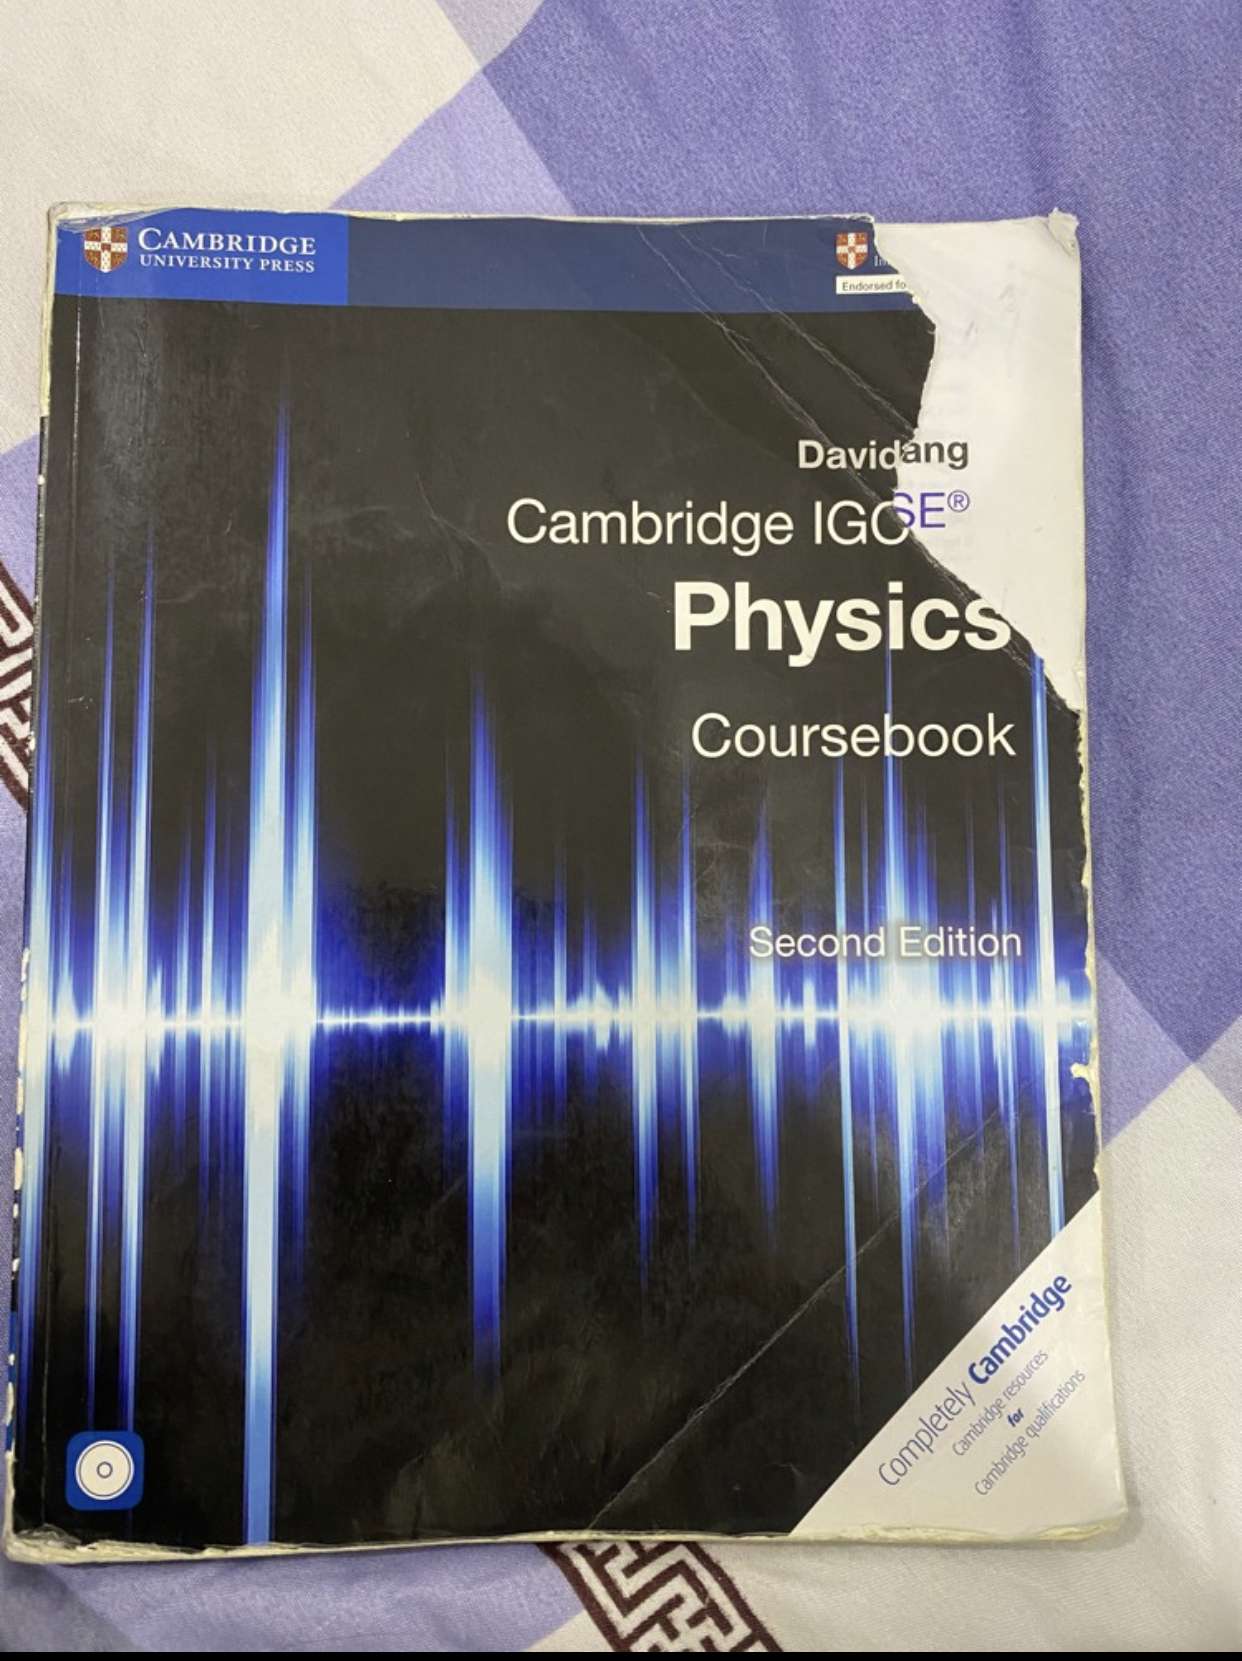 Physics Cambridge book